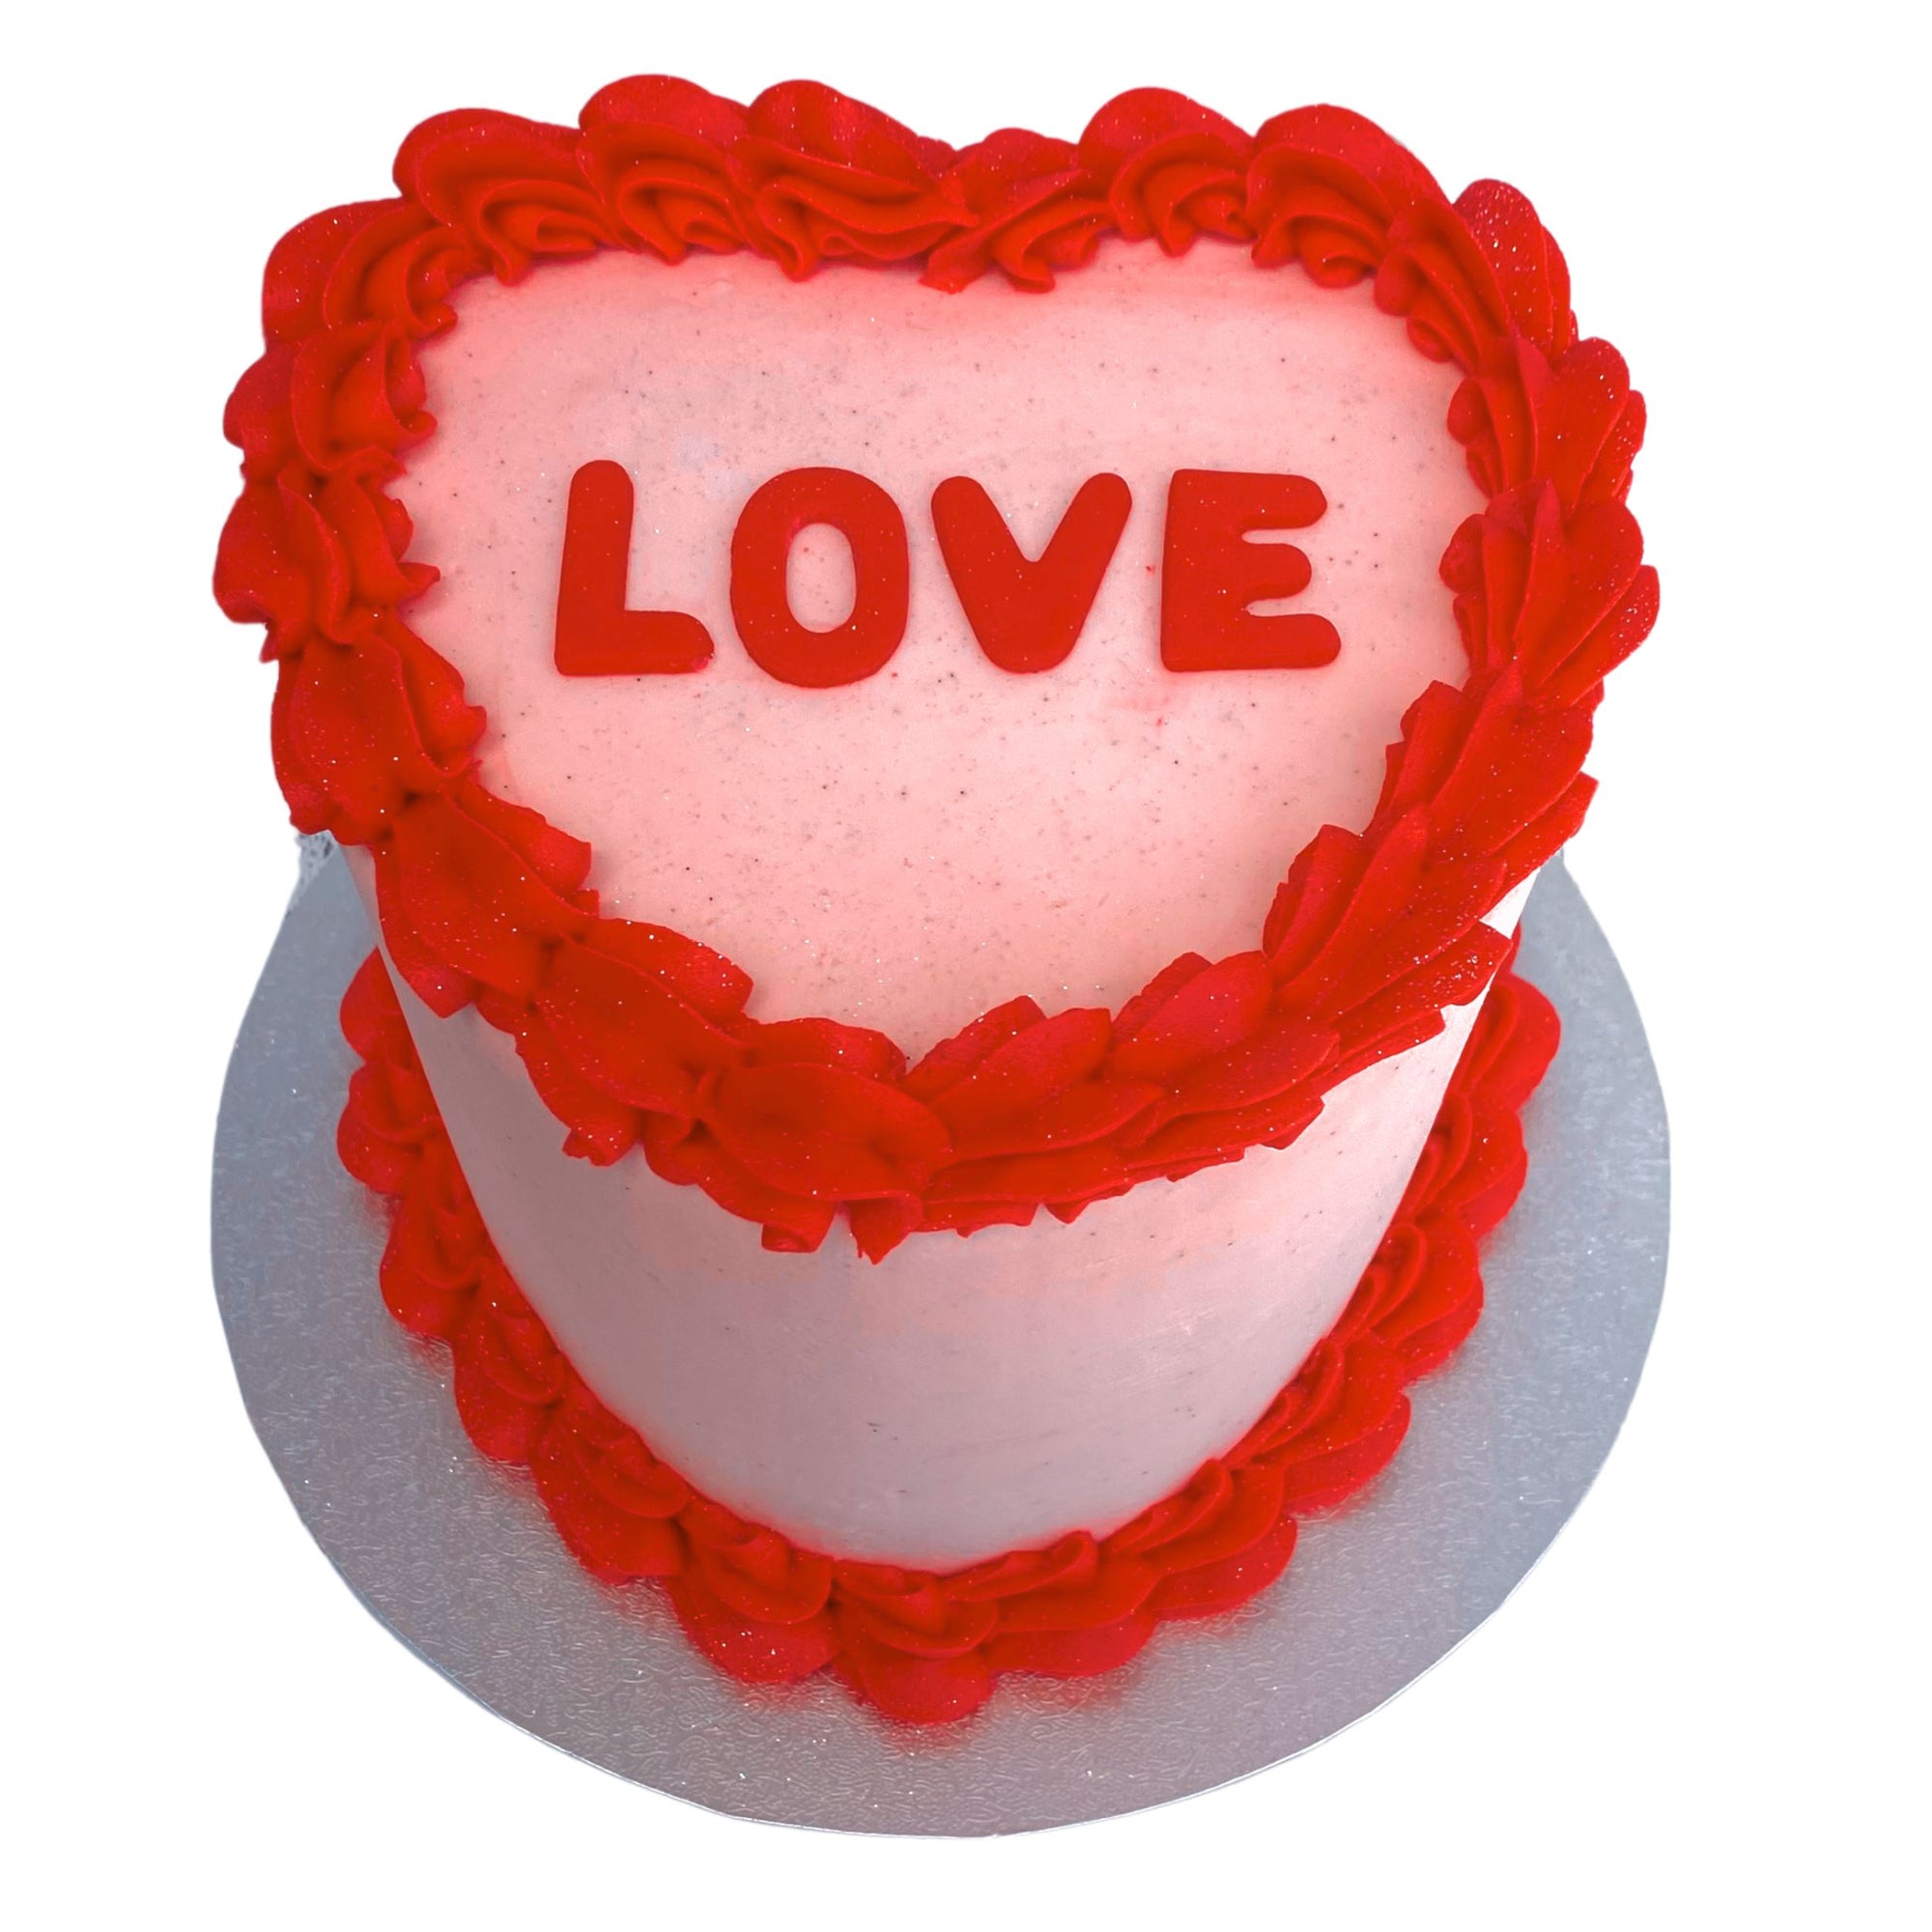 Vintage Valentine's Heart Cake The Cupcake Queens 